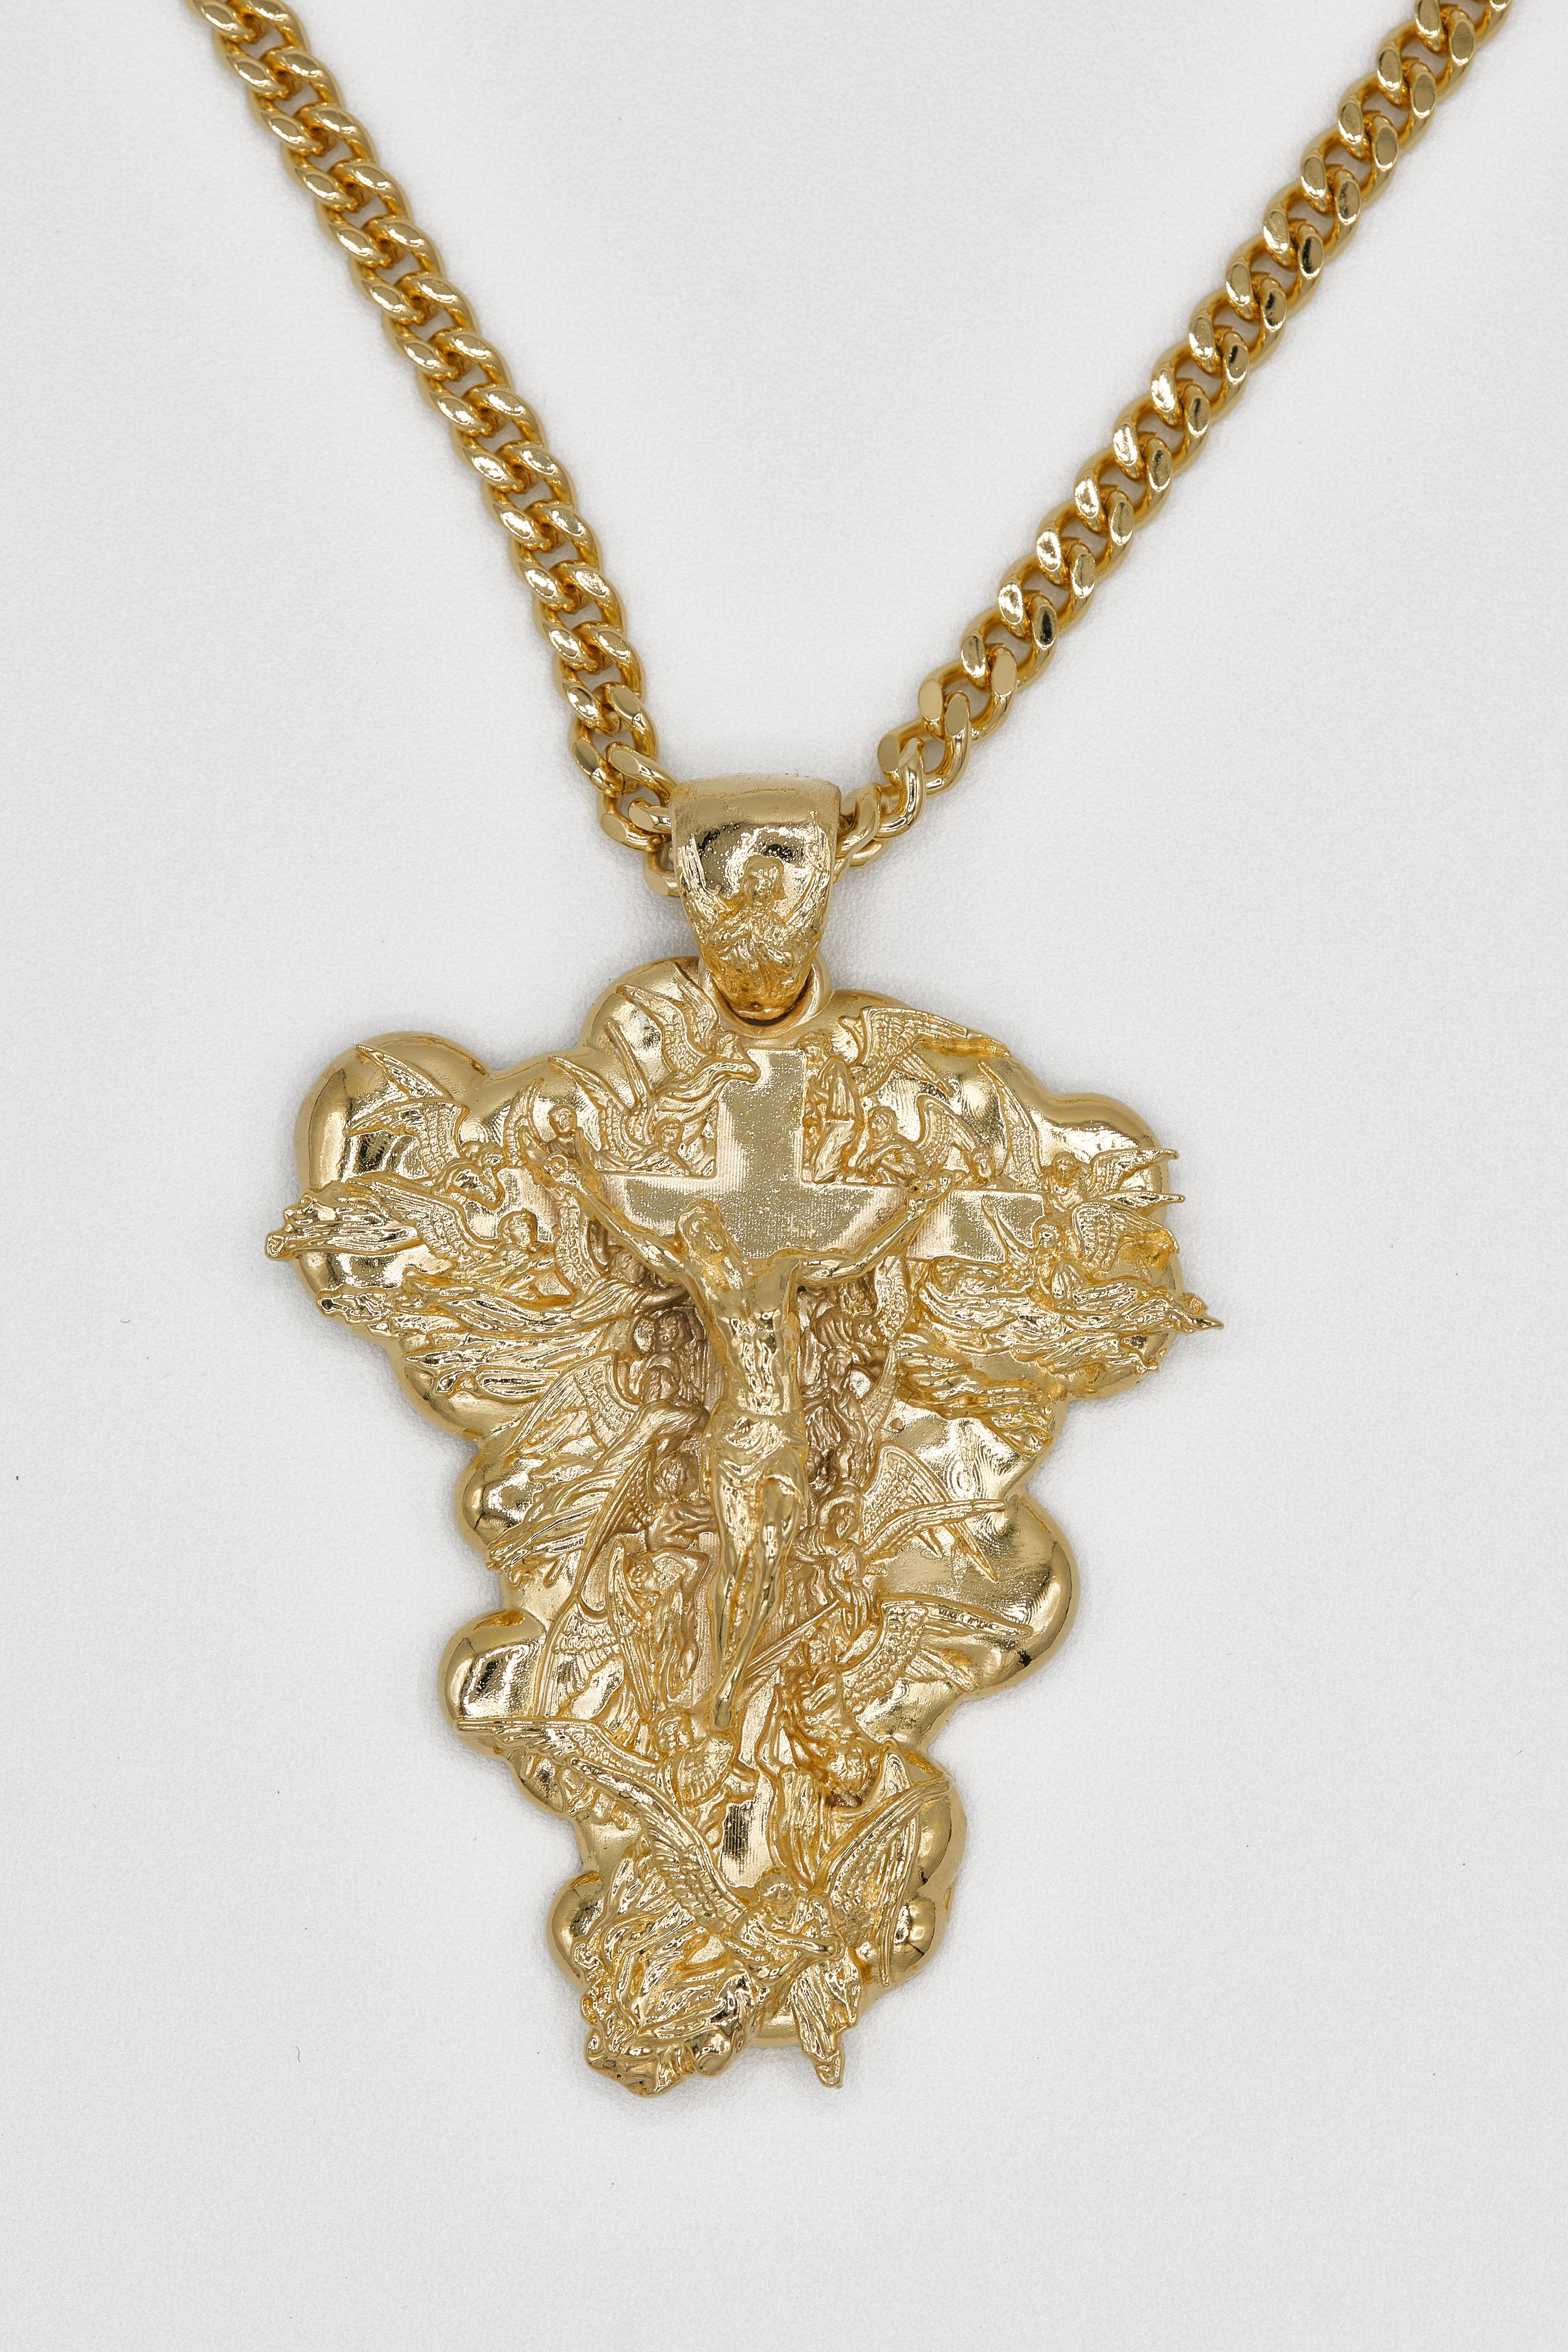 Grand pendentif en or jaune 14 carats « Ascension de Jésus » en vente 2